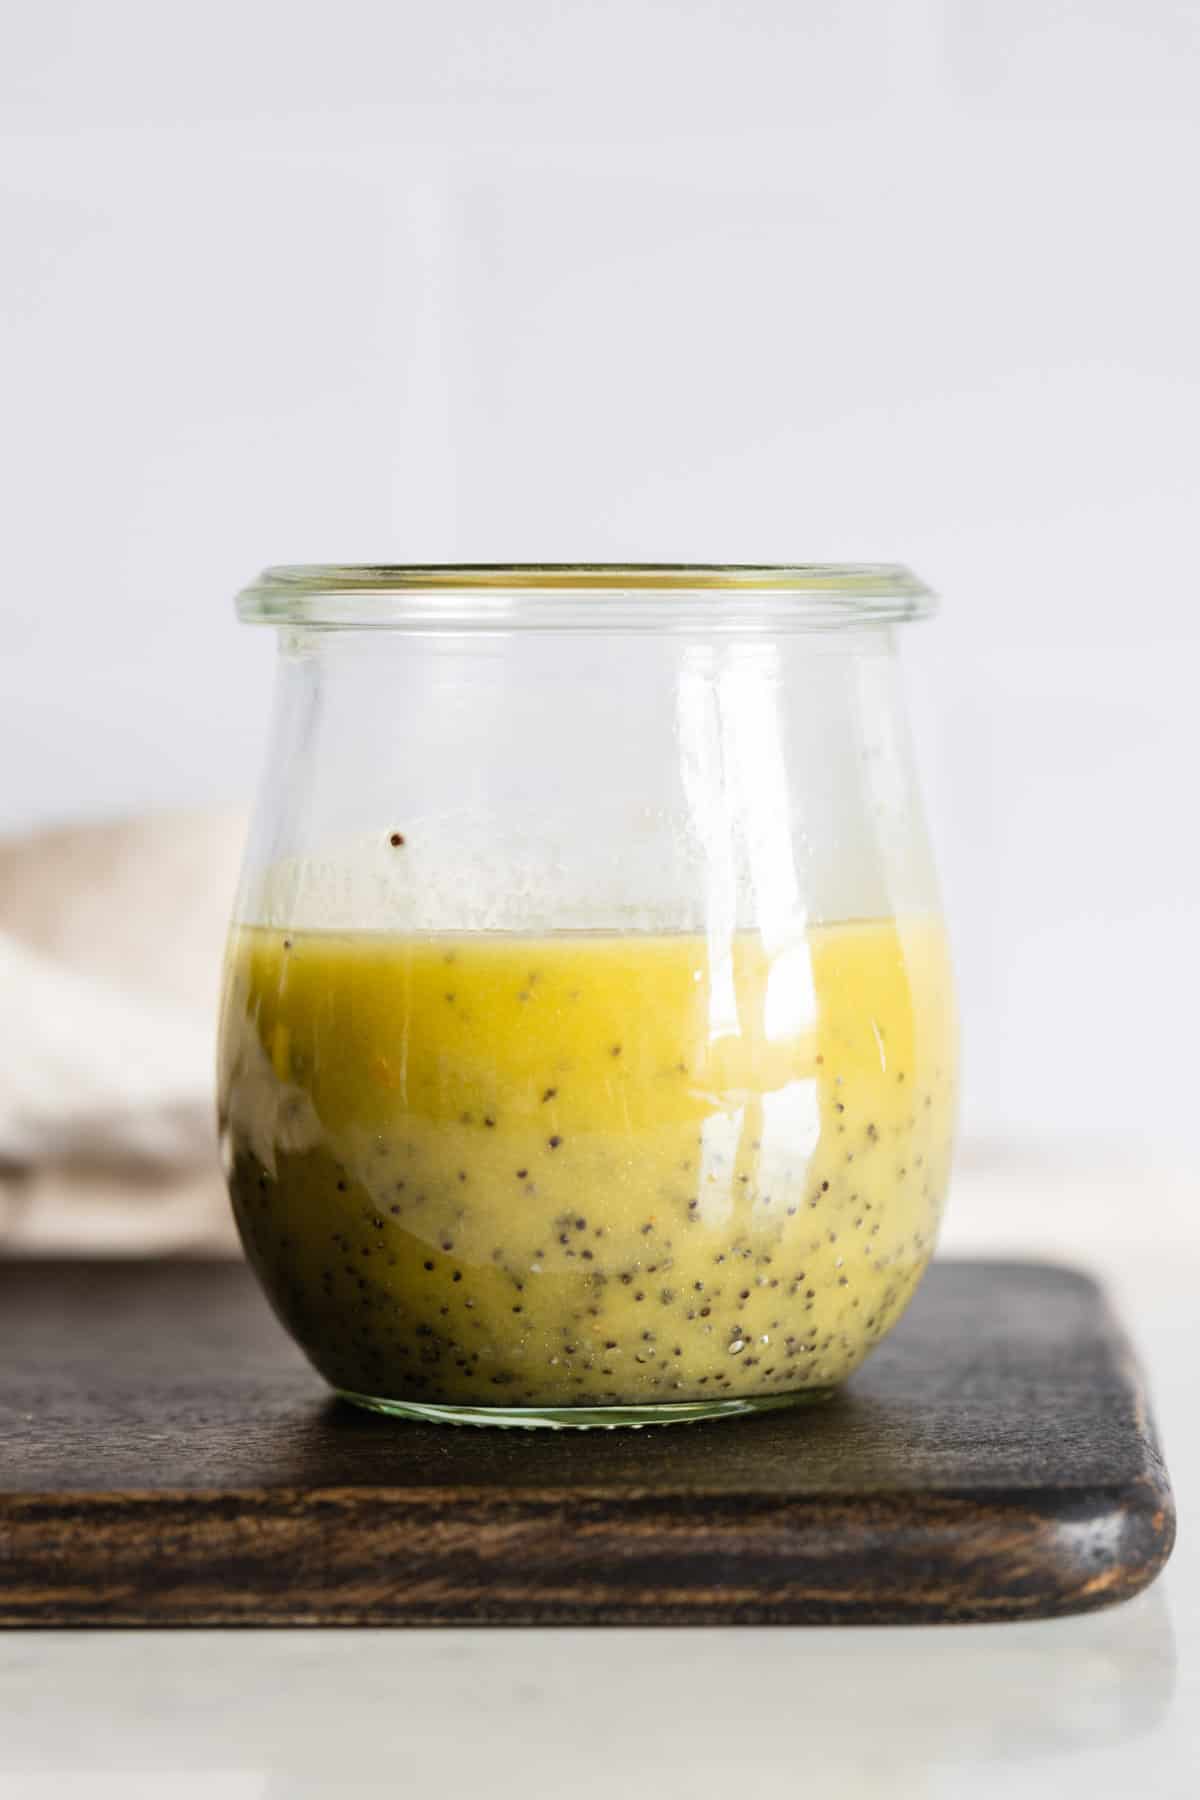 Lemon Poppy Seed Salad Dressing in a small glass jar.